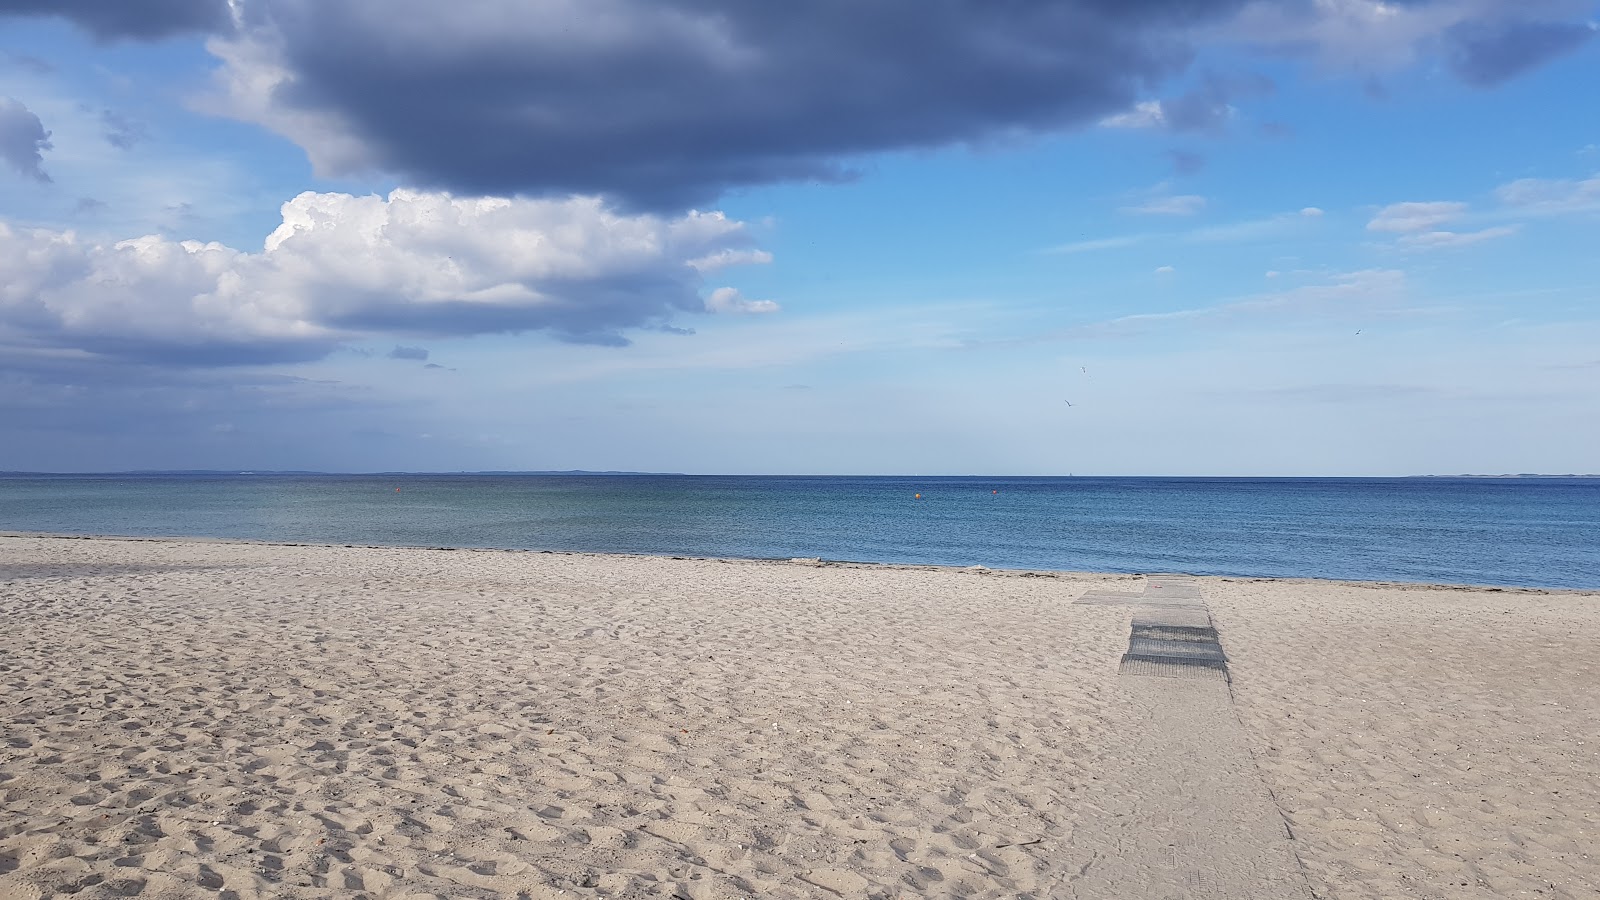 Foto de Saksild Beach con playa amplia